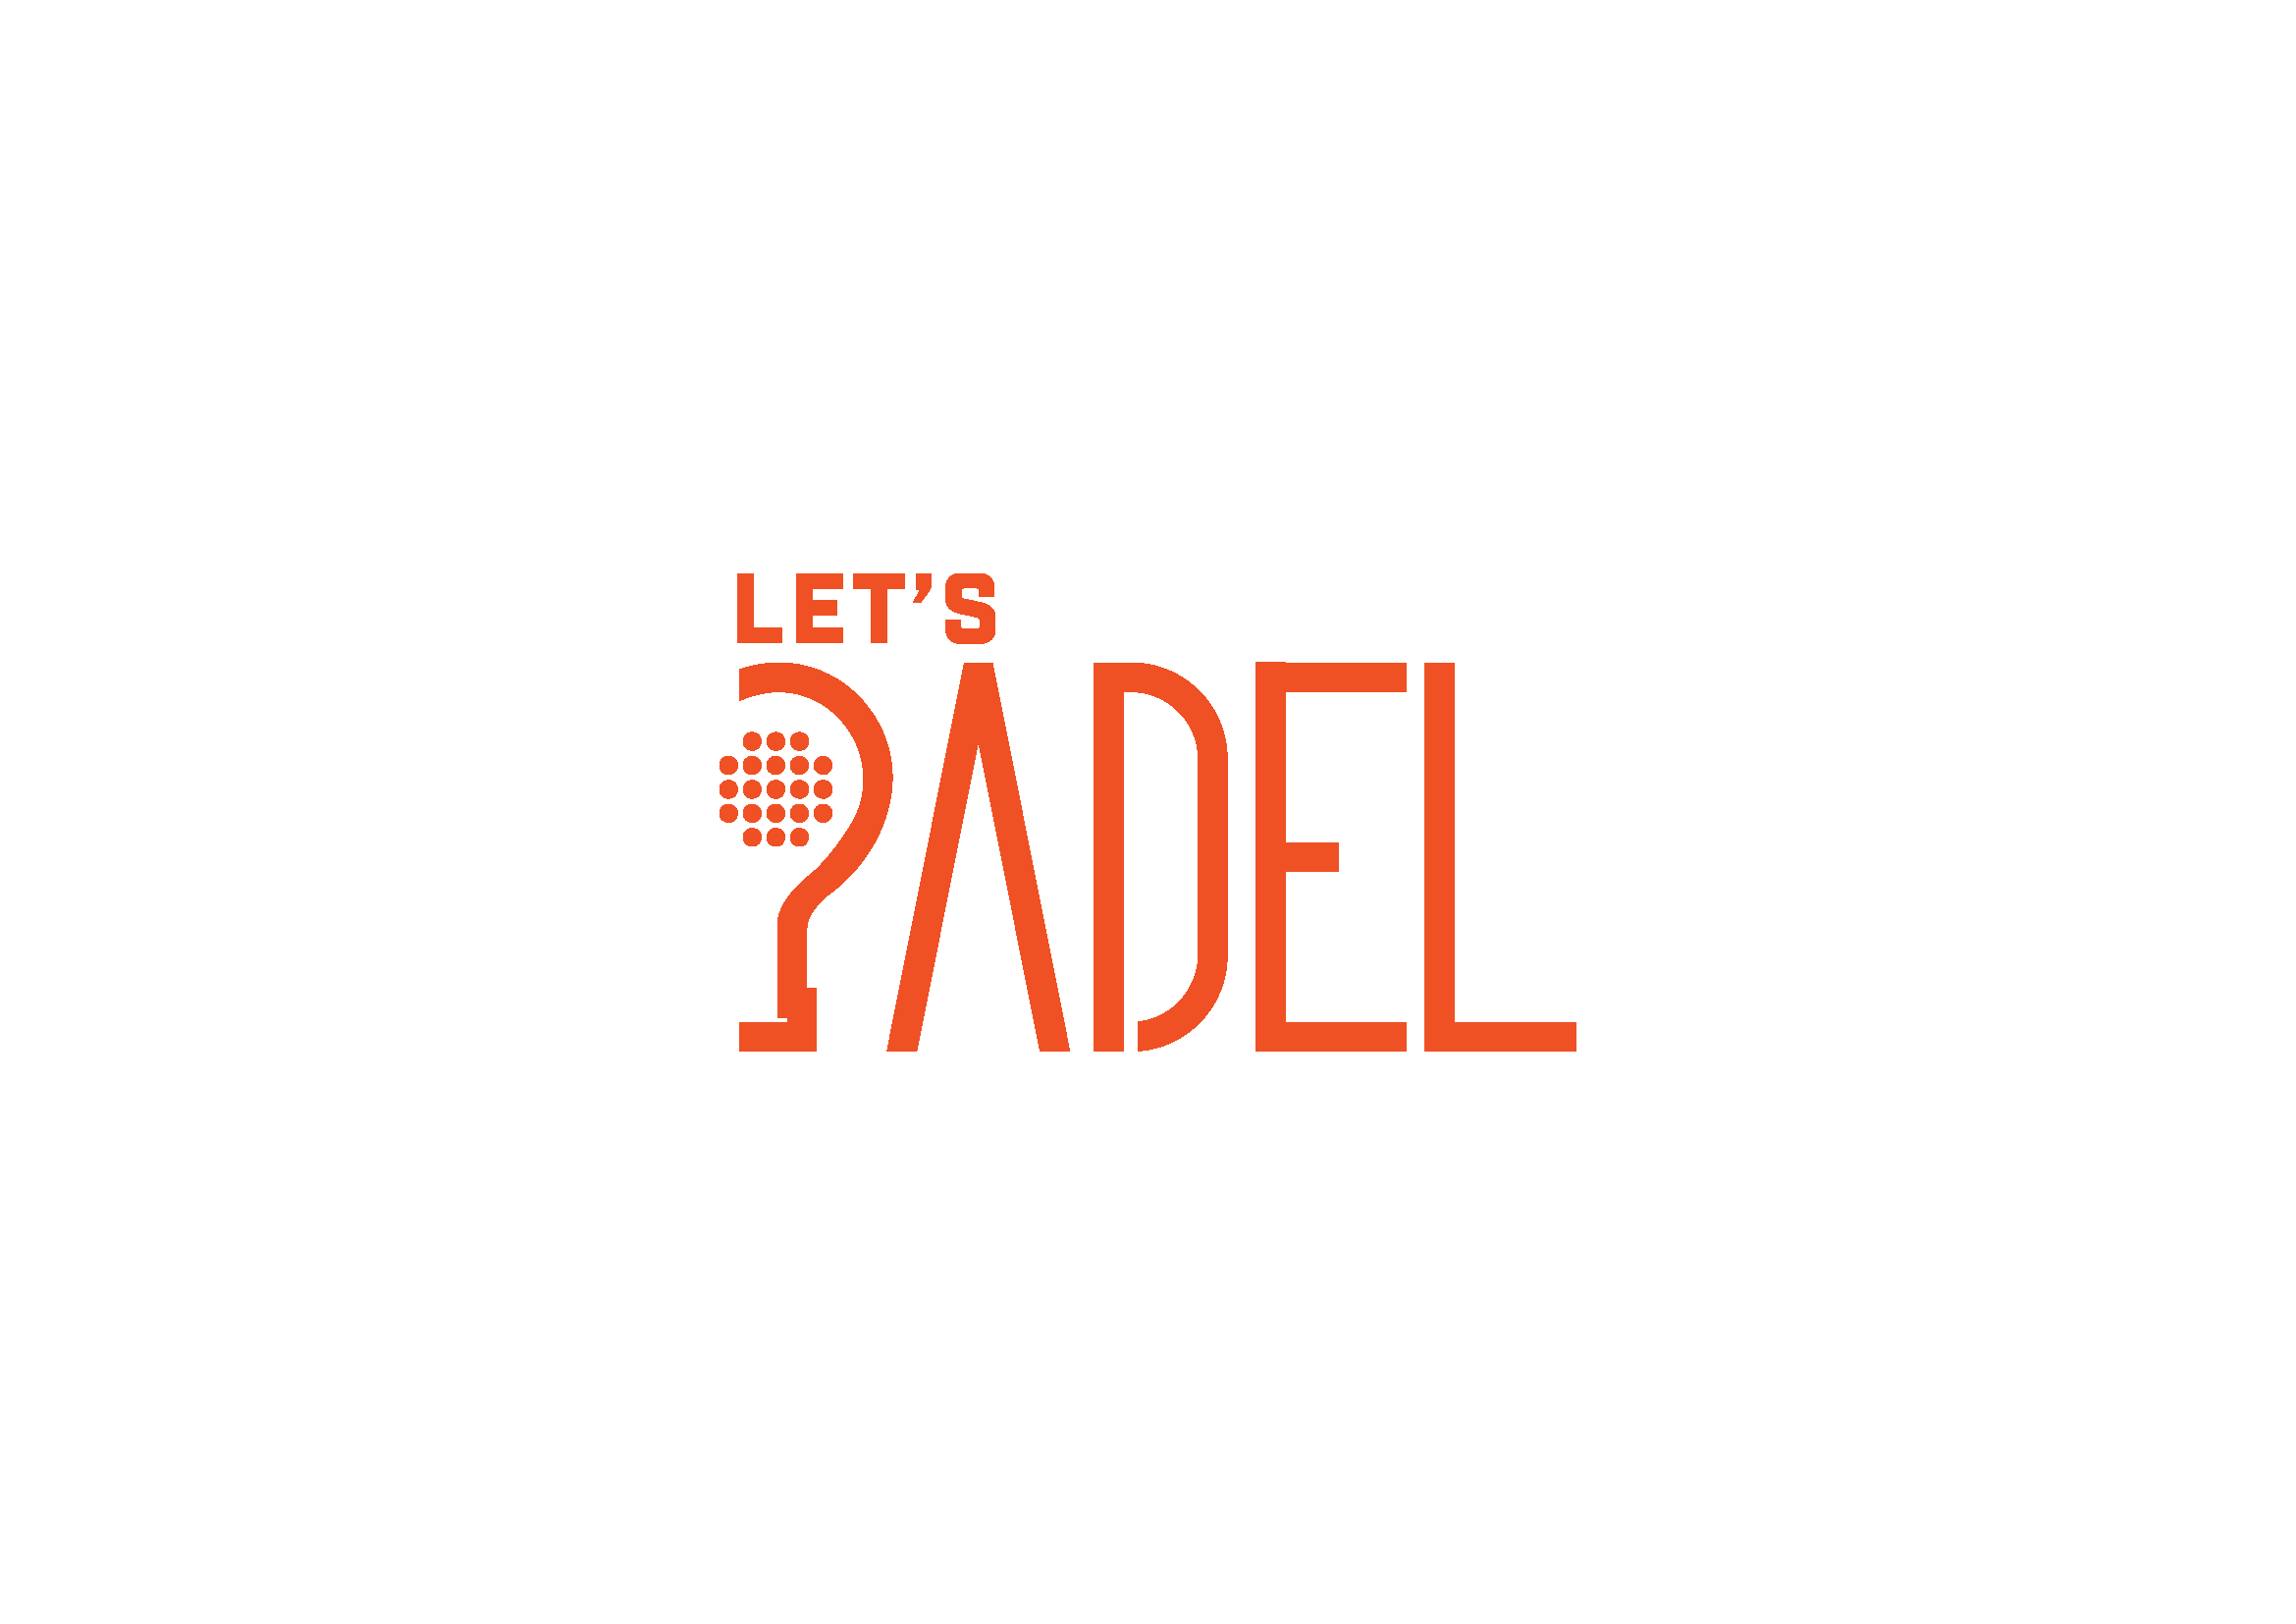 Let's Padel